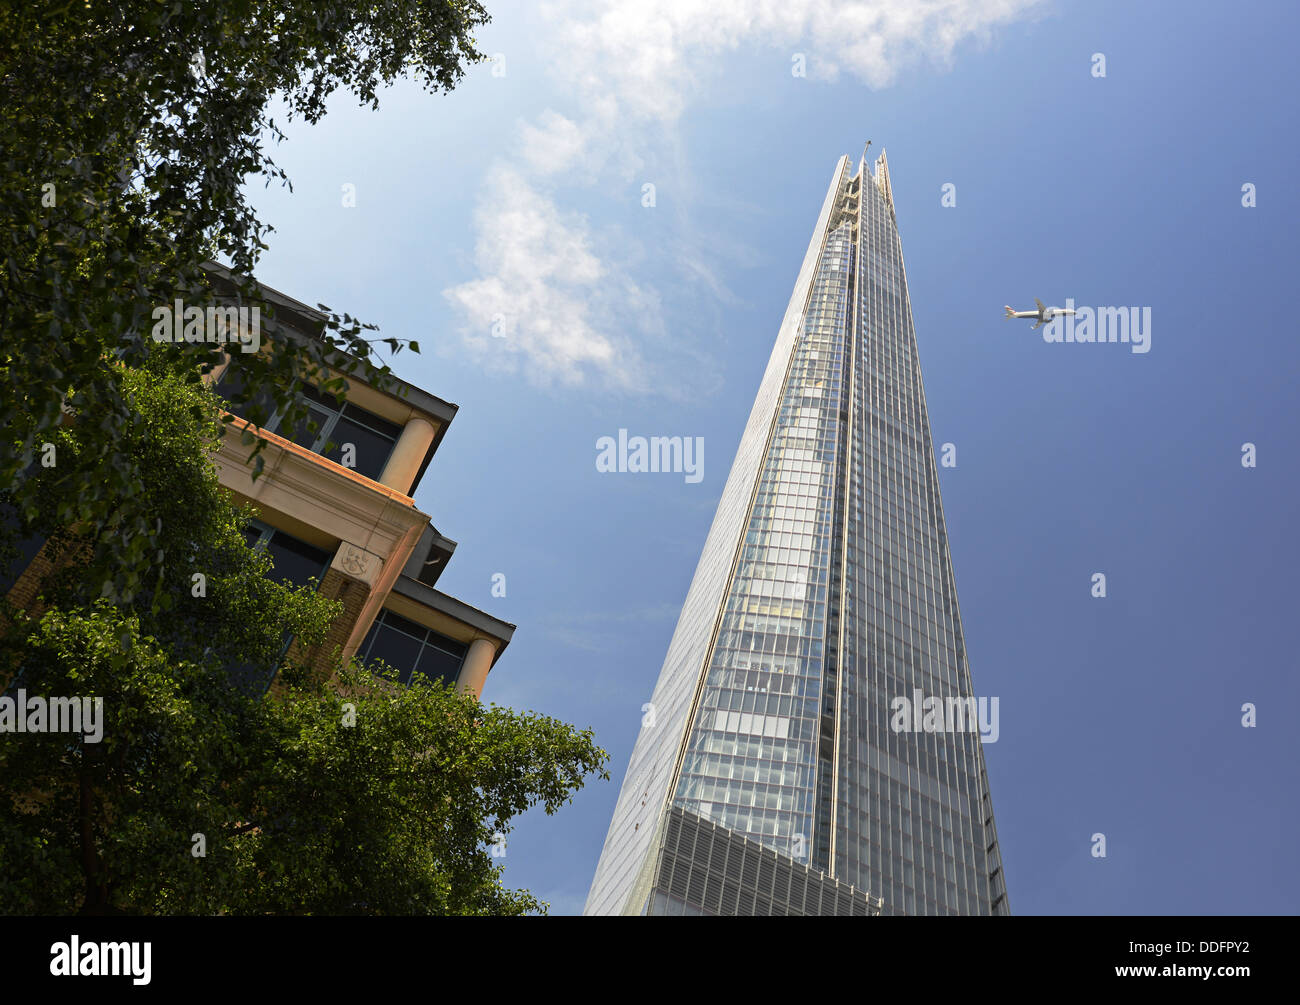 Le gratte-ciel Shard building et avion, Southwark, London, England, UK Banque D'Images